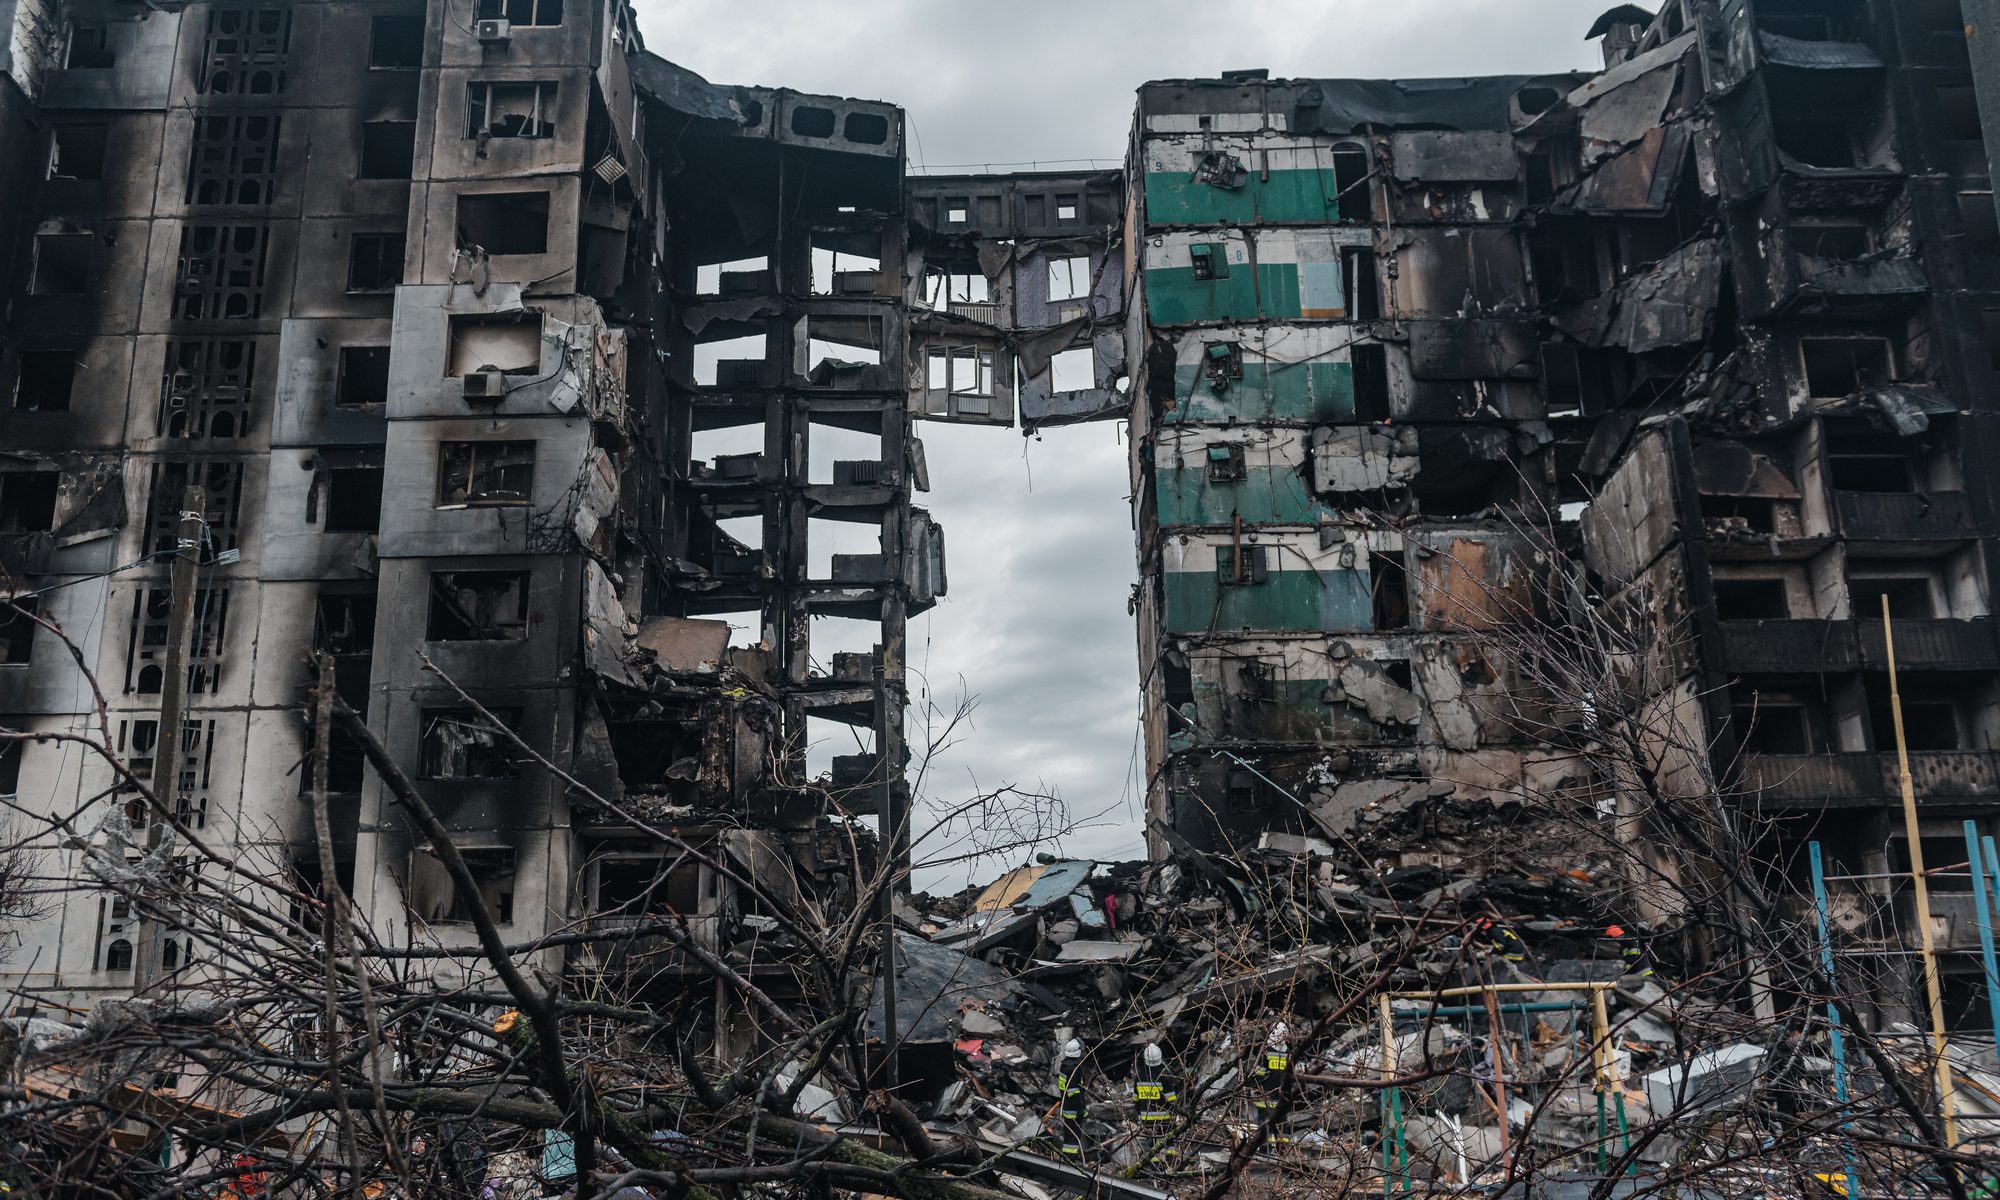 photograph of destroyed building in Ukraine